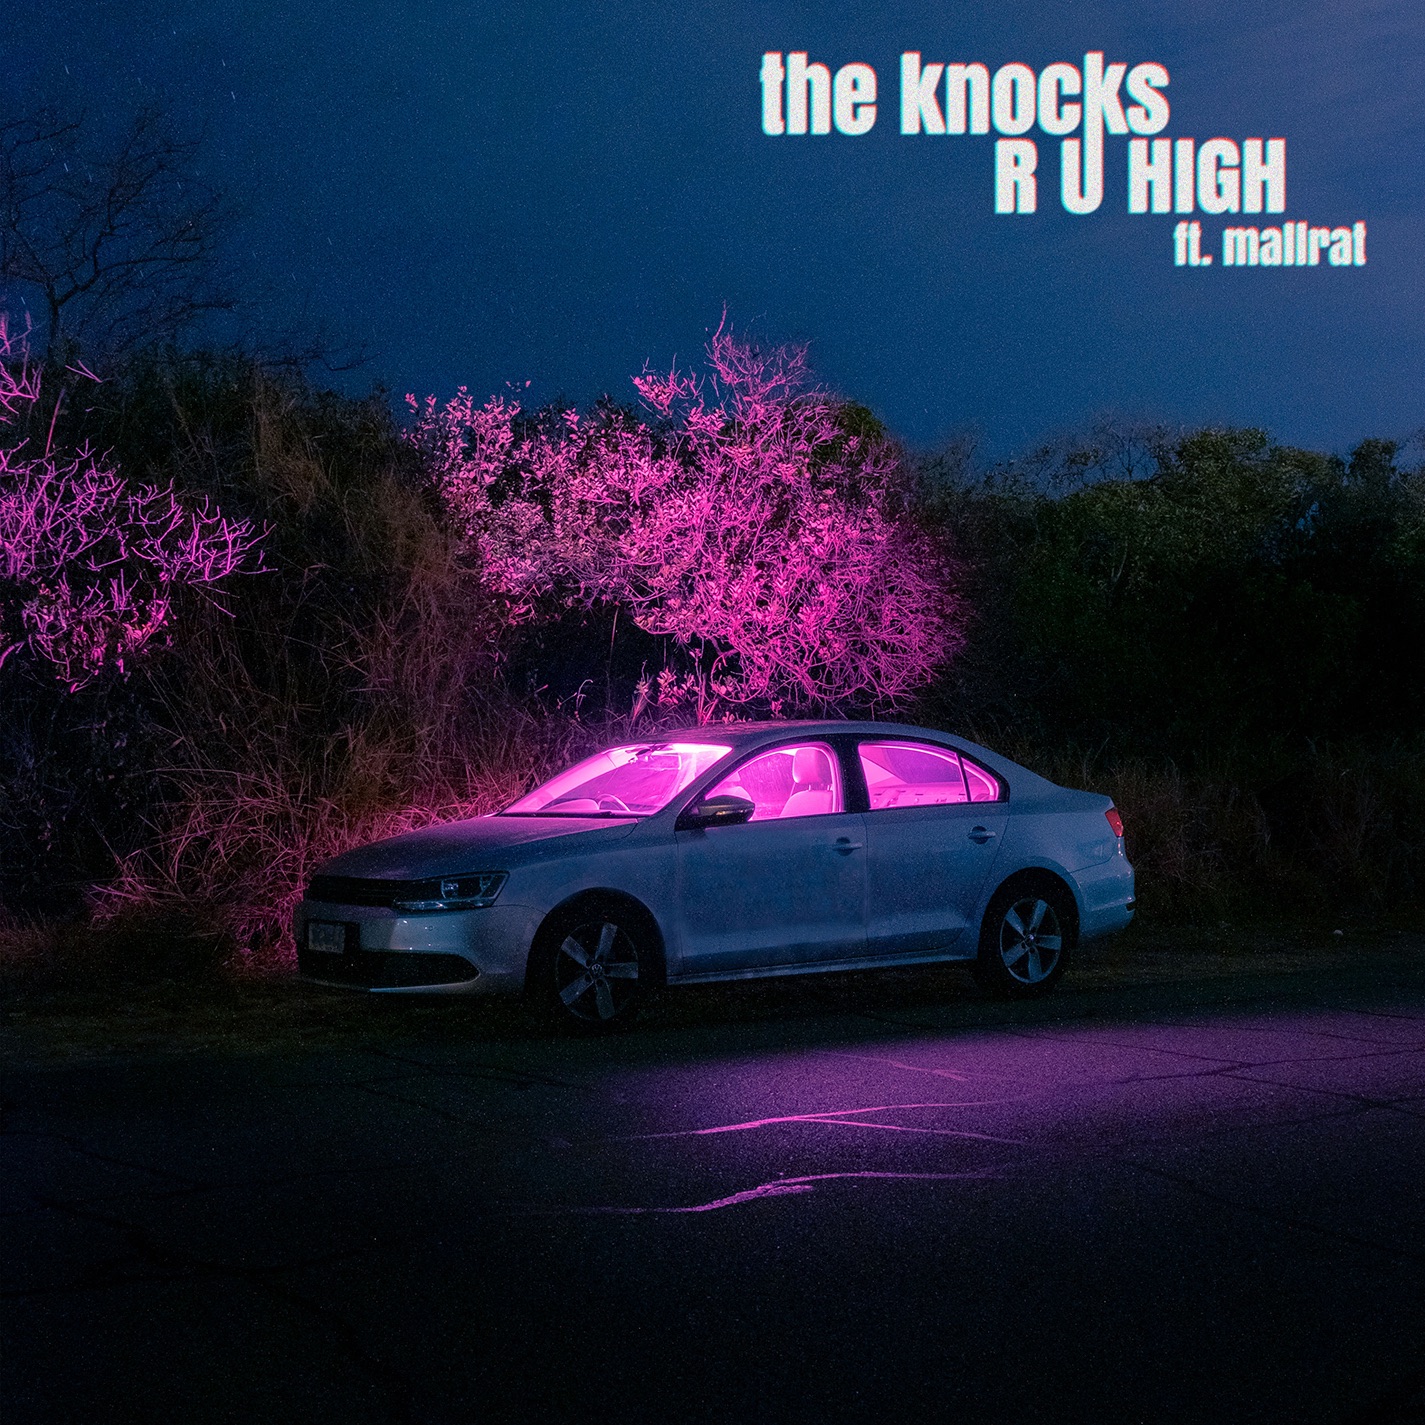 The Knocks - R U HIGH (feat. Mallrat) - Single